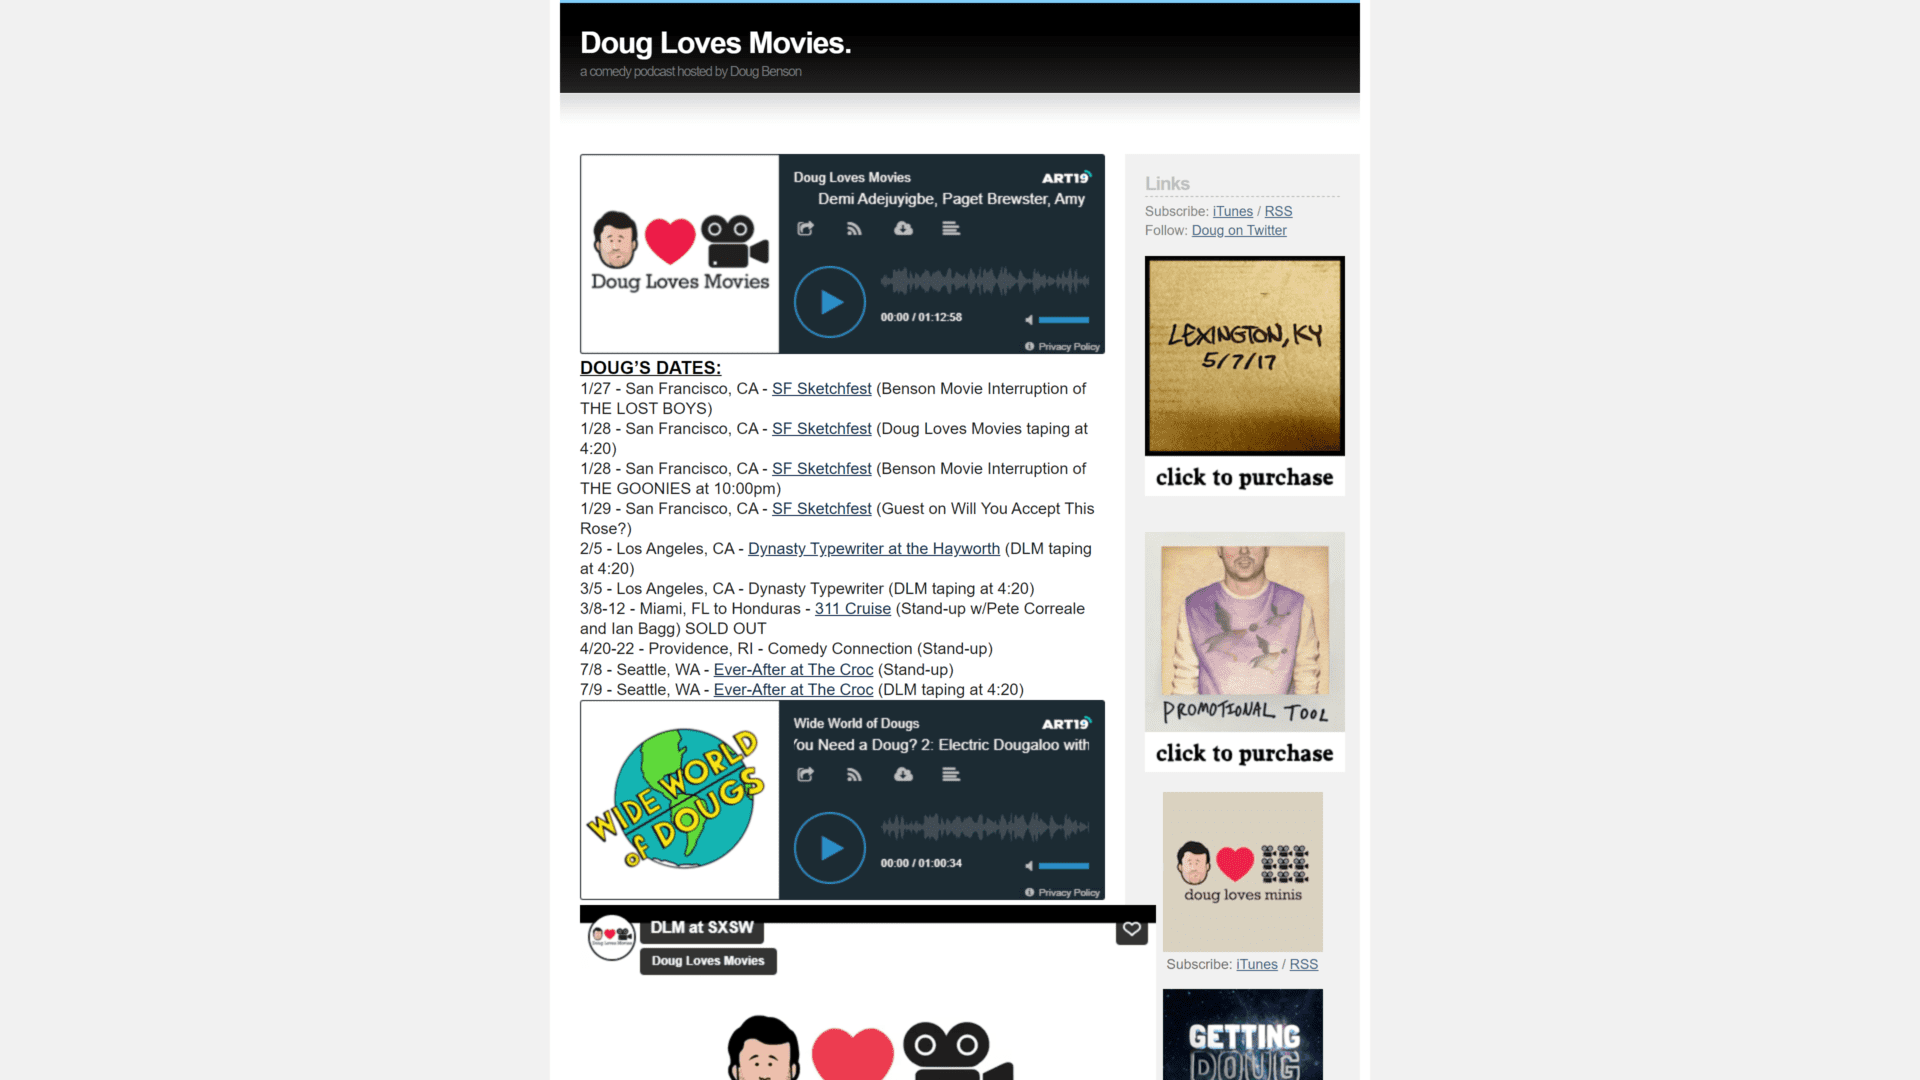 screenshot o the doug loves movies homepage